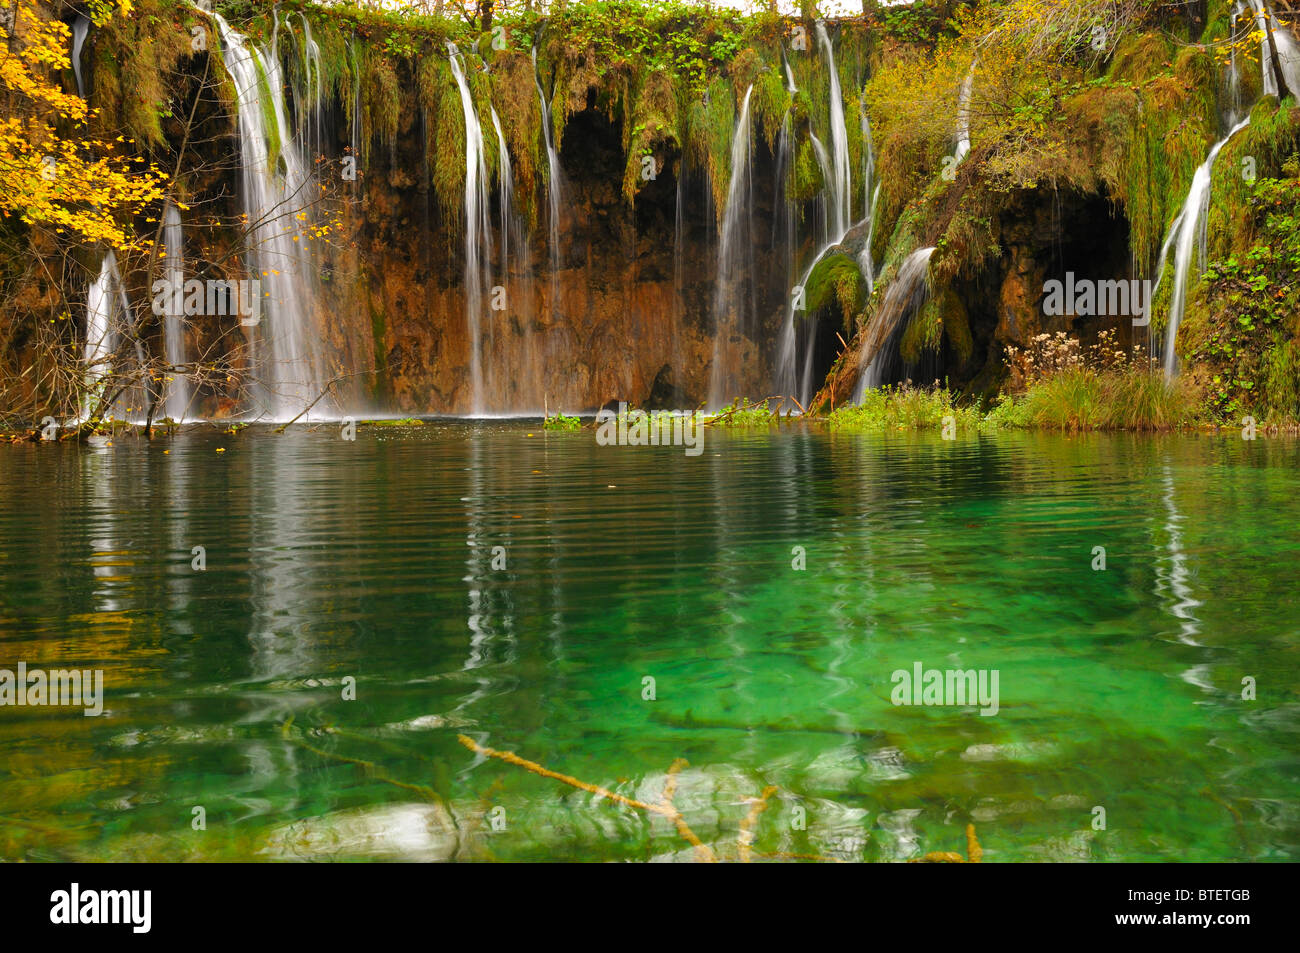 Pond and waterfalls in autumn lush vegetation in Plitvice (Croatia - Hrvatska) Stock Photo